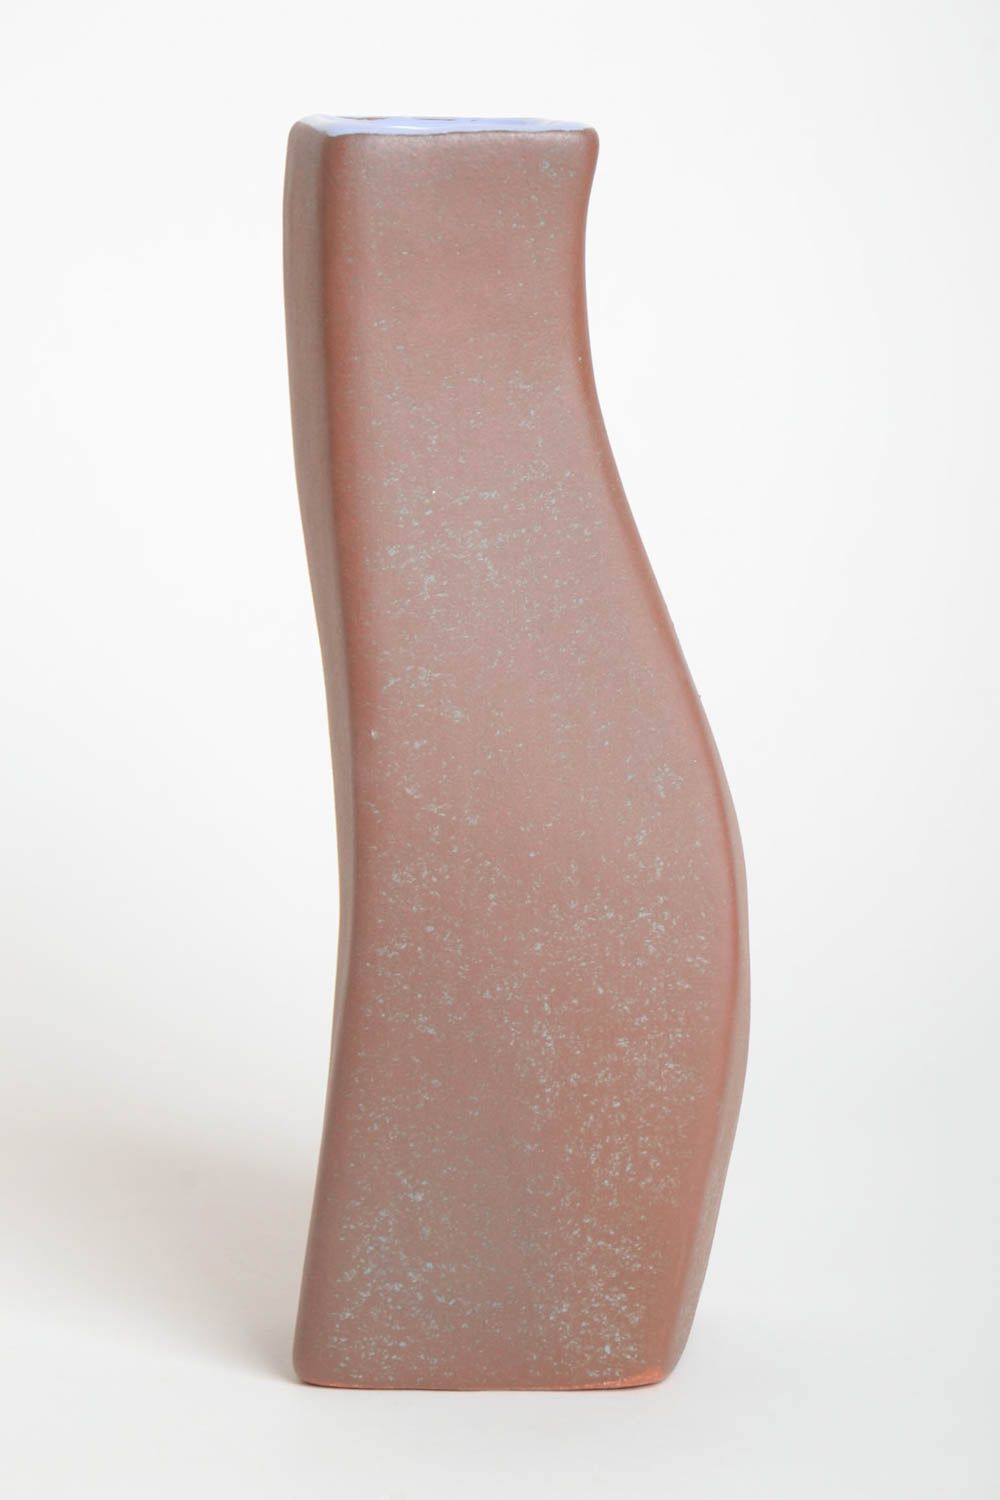 12 inches ceramic square shape tube vase for home décor 2 lb photo 4